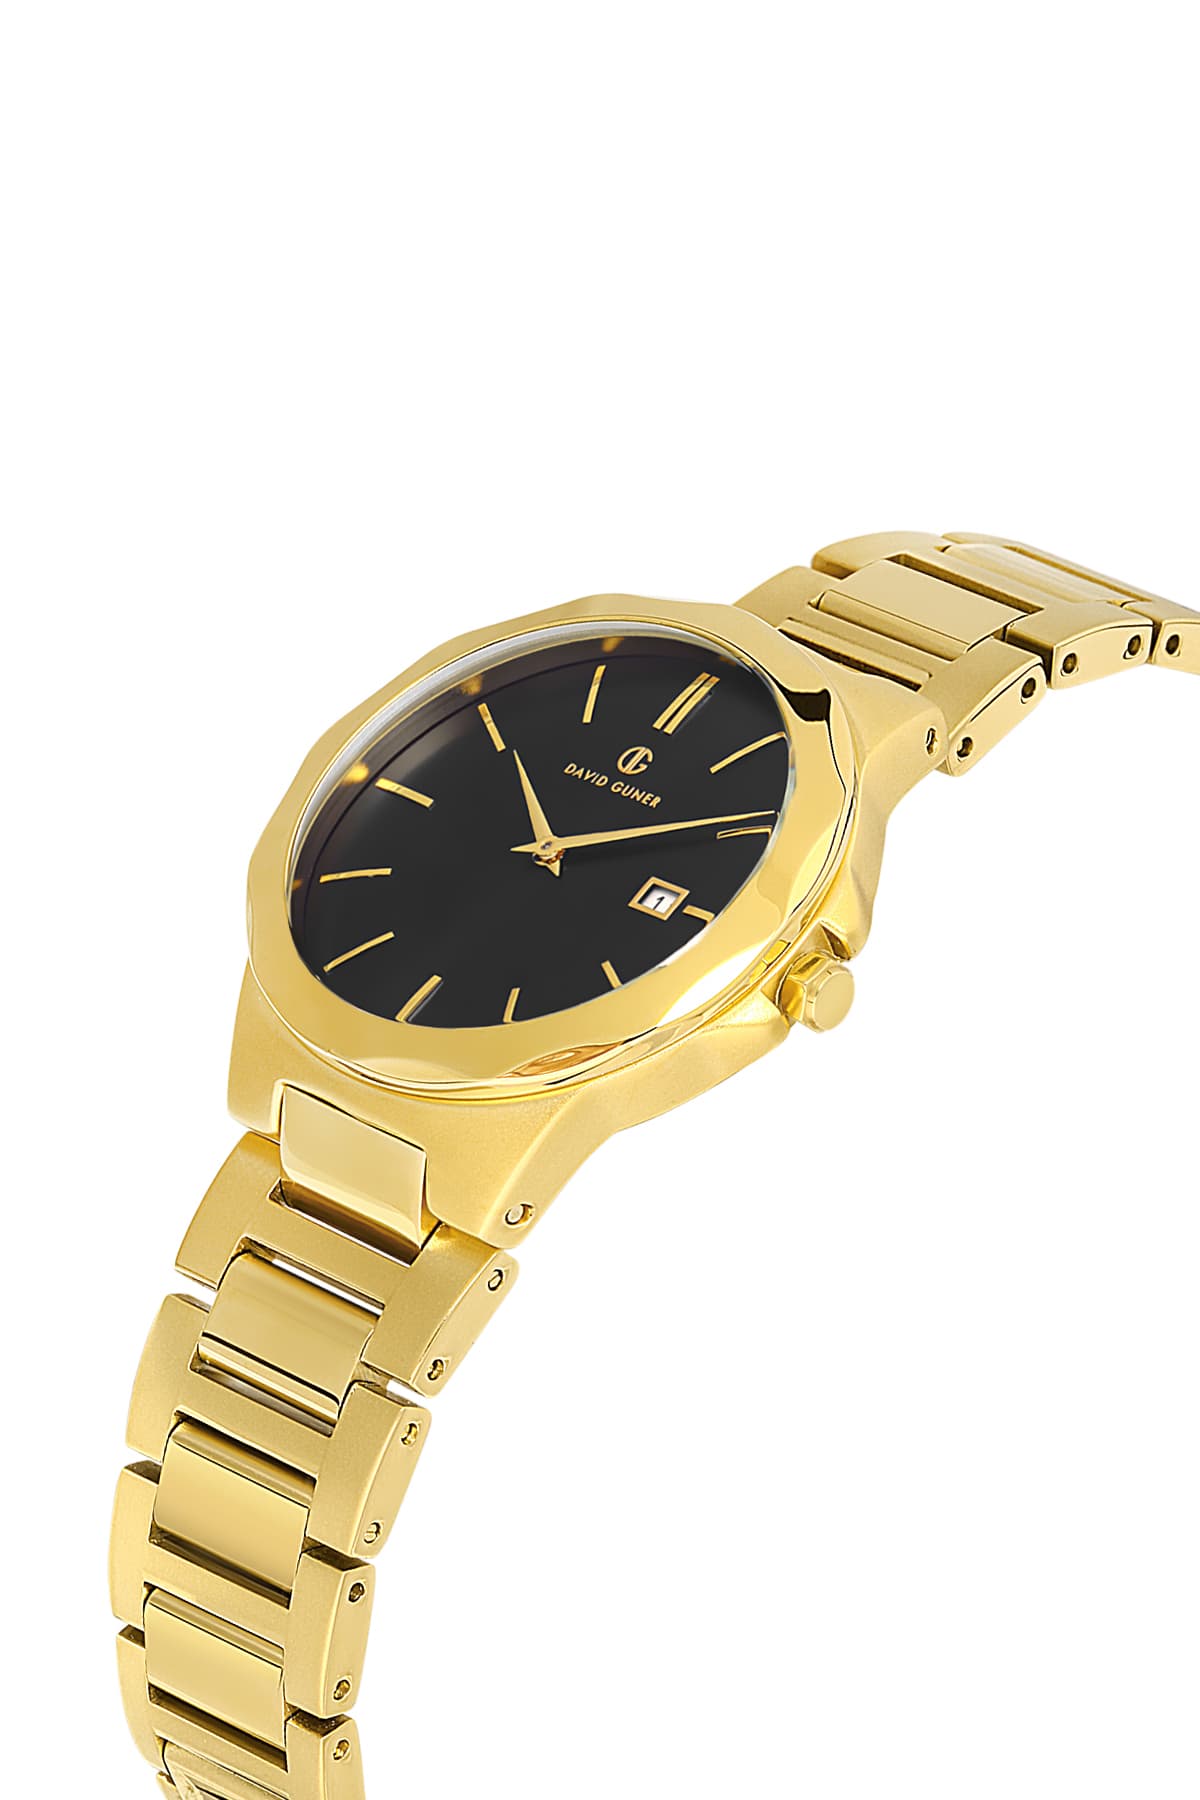 DAVID GUNER Women's Wristwatch with Black Dial and Yellow Coated Calendar